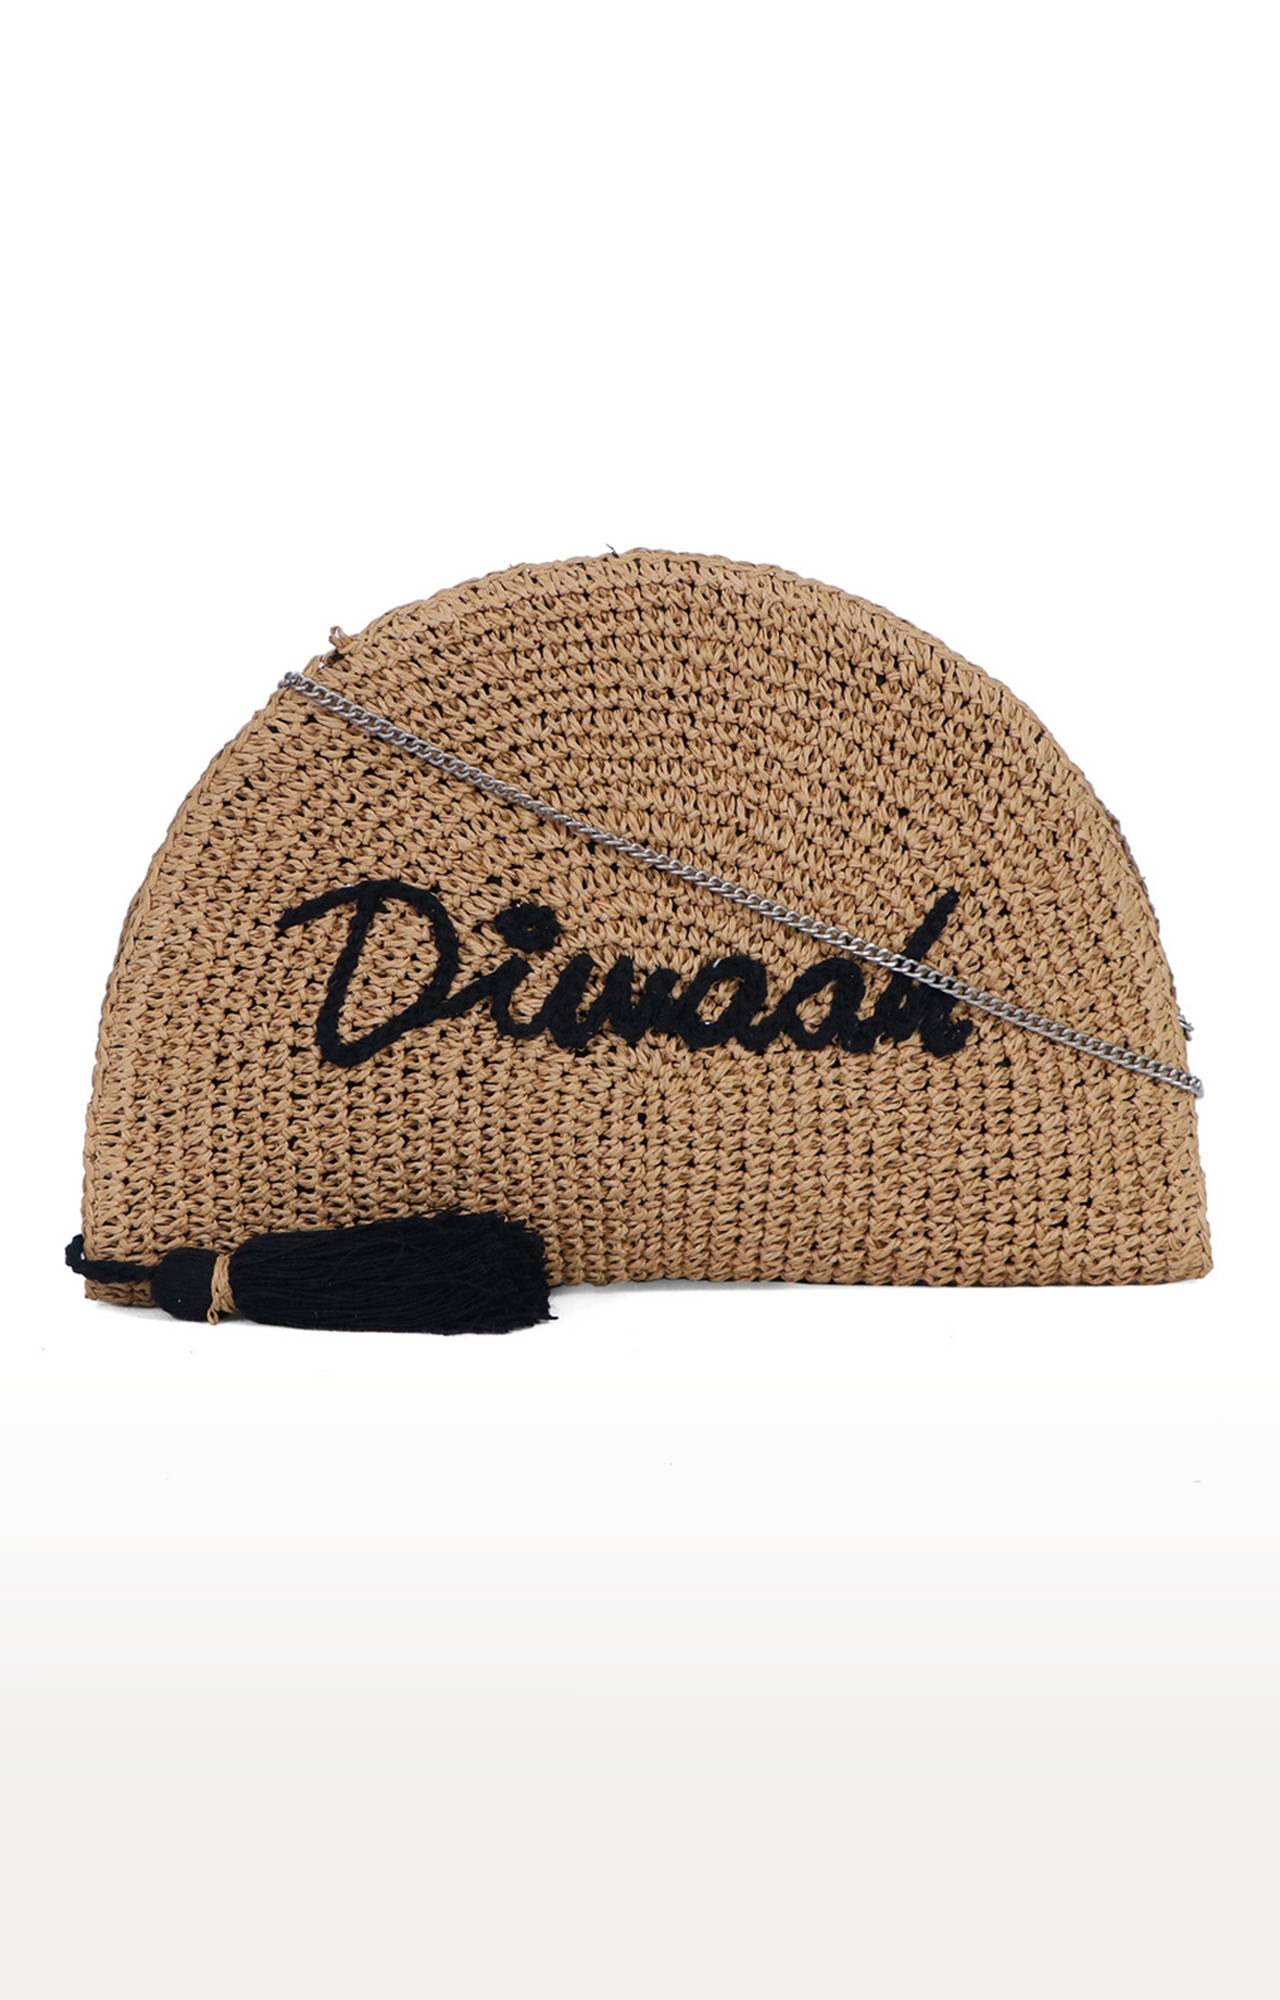 DIWAAH | Diwaah Beige Embroidered Clutches